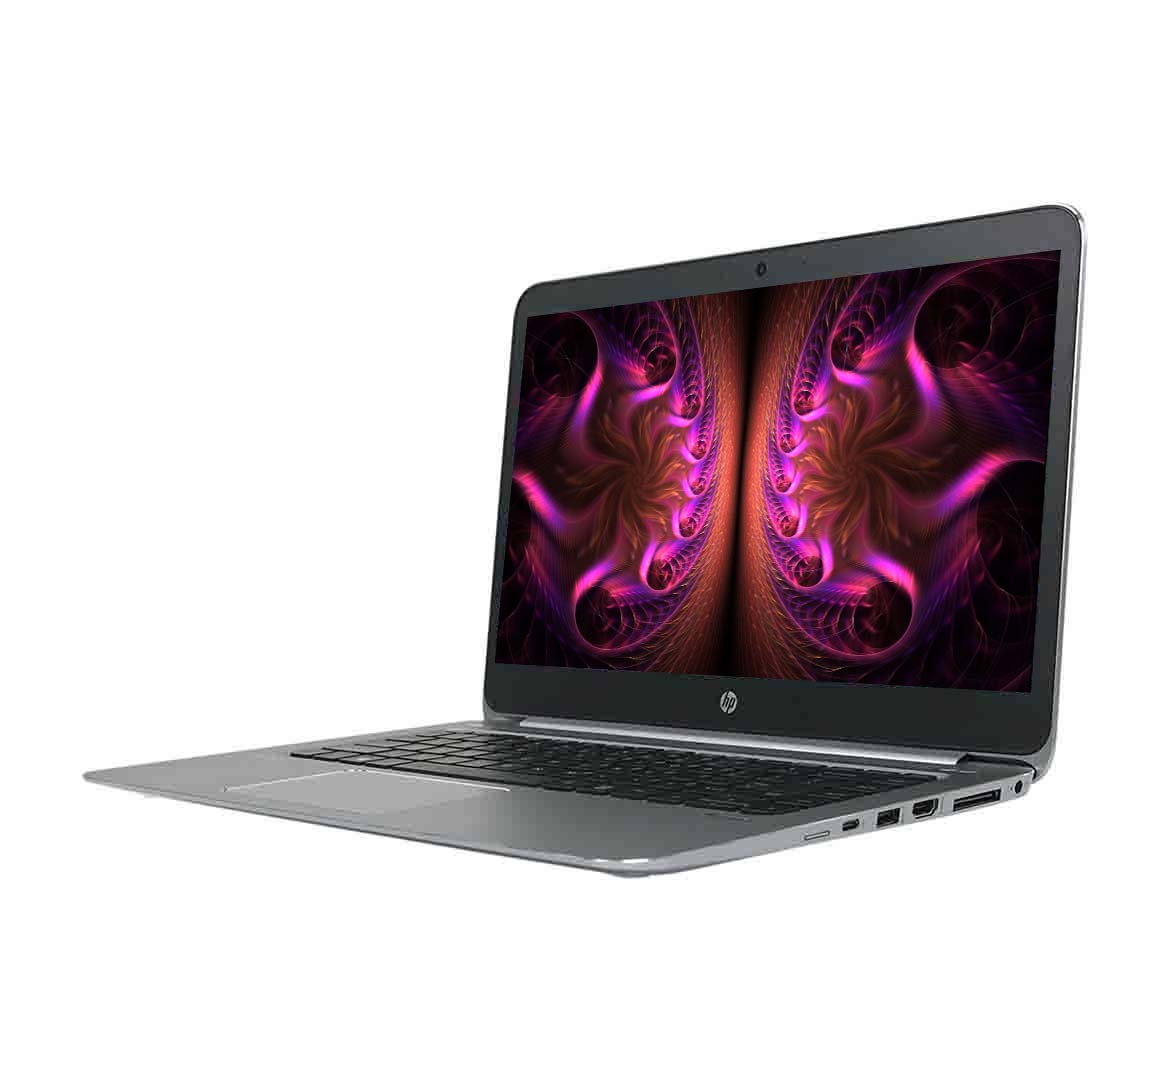 HP Elitebook Folio 1040 G3 Business Laptop, Intel Core i5-6th Gen CPU, 8GB RAM, 256GB SSD, 14 inch Display, Windows 10 Pro